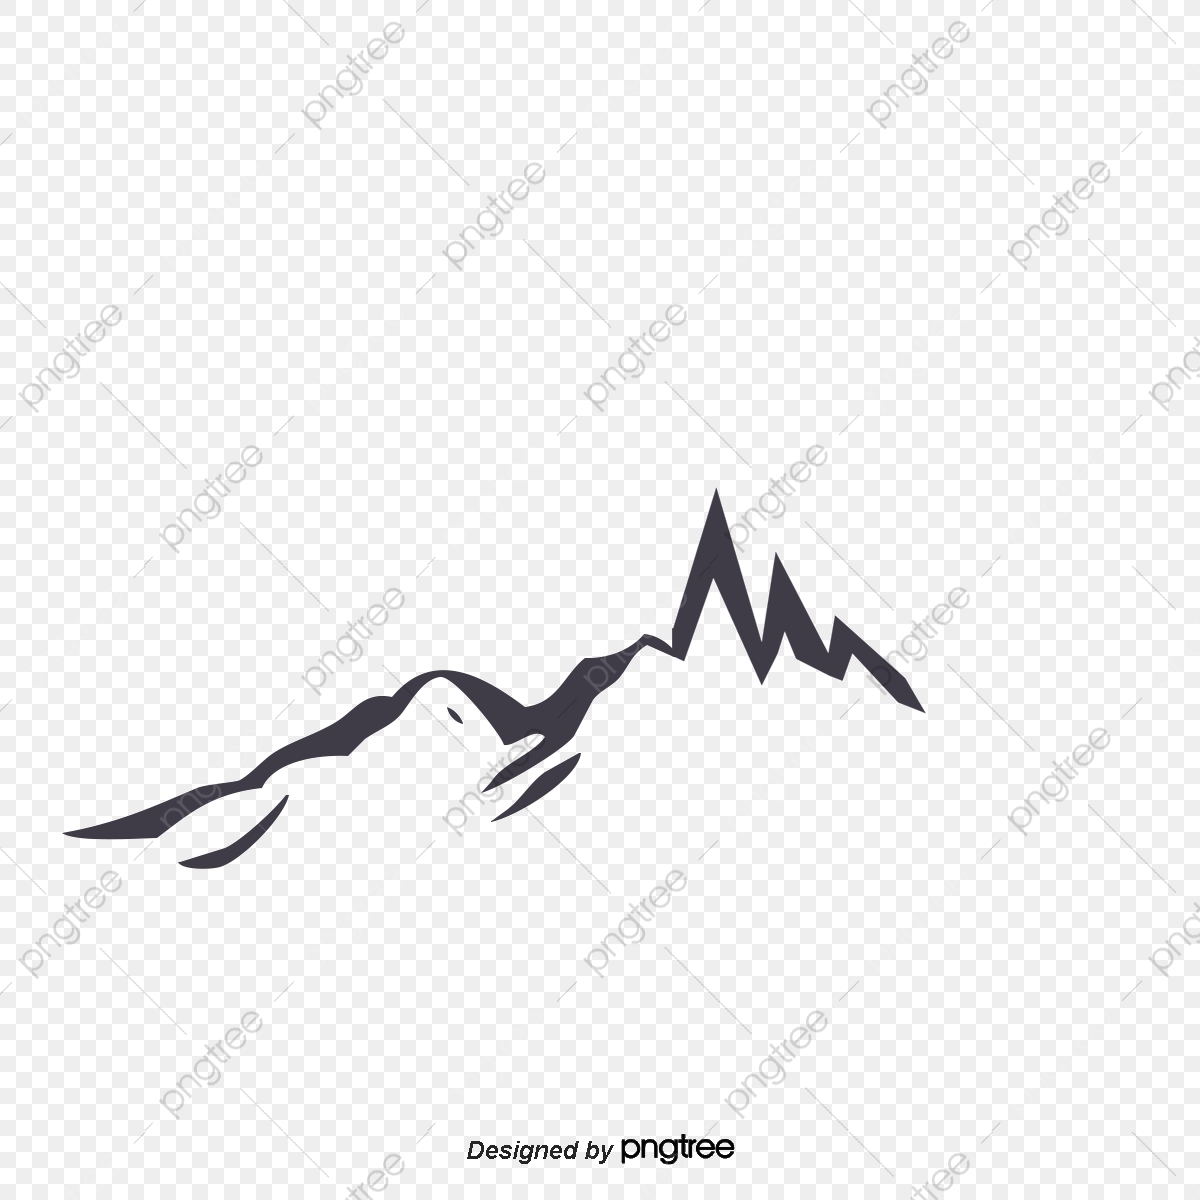 Mountain Silhouette Vector at Vectorified.com | Collection of Mountain ...